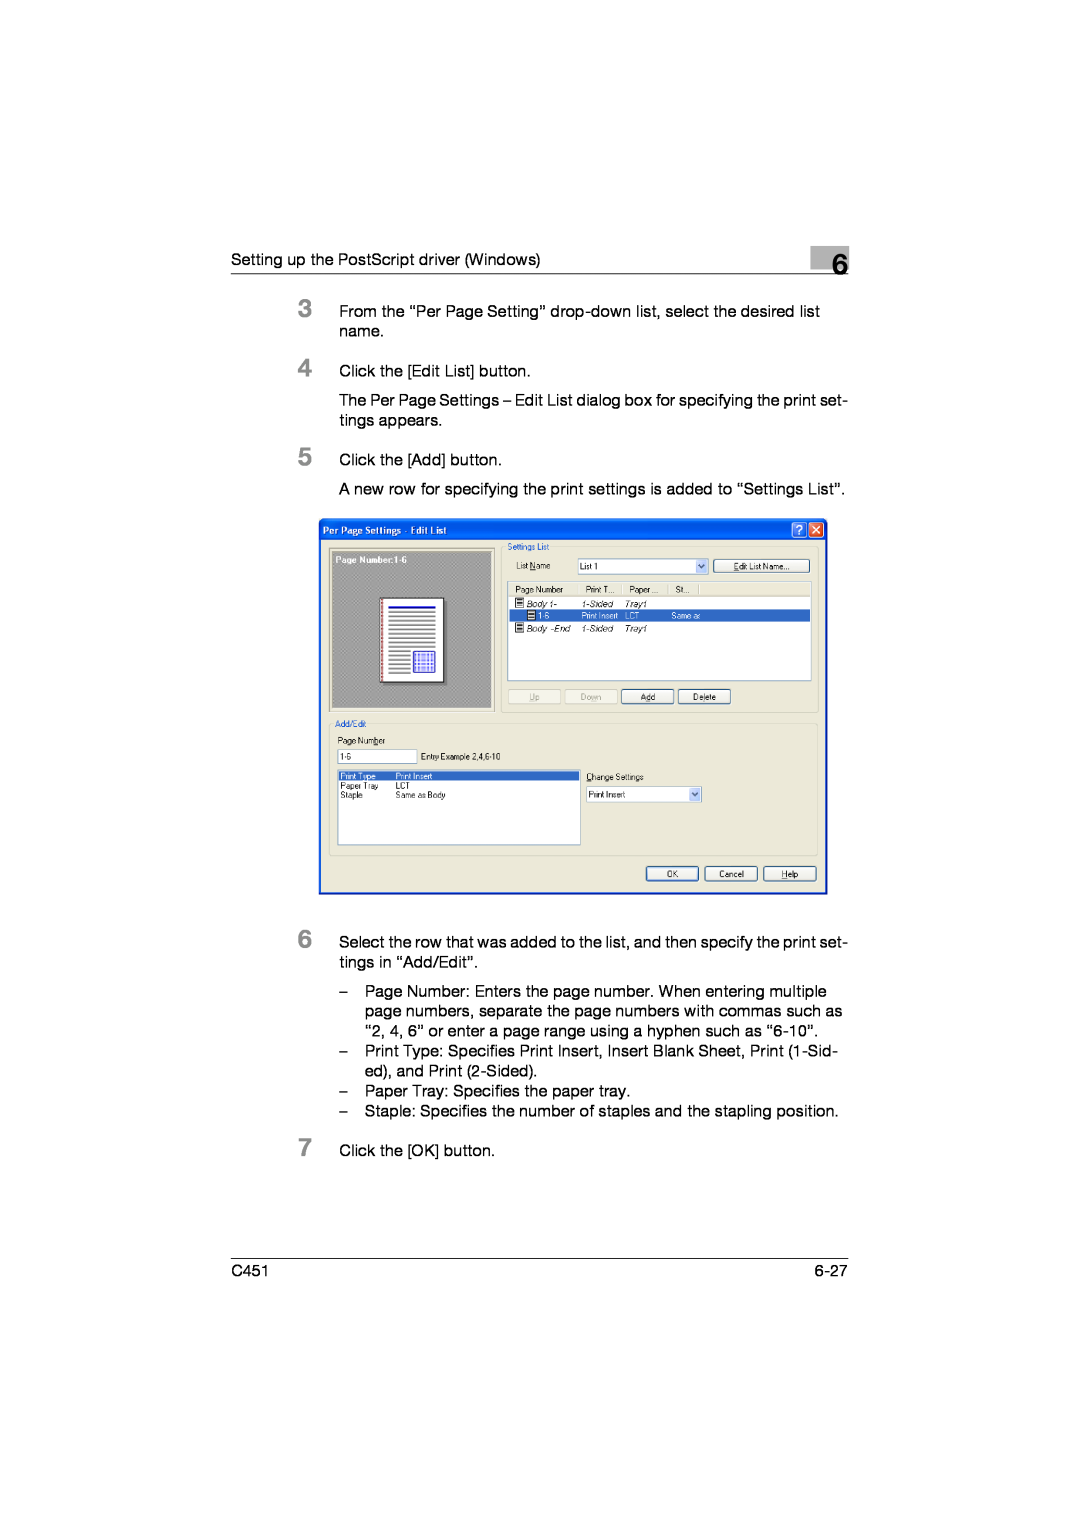 Konica Minolta C451 manual 3 4 5, Setting up the PostScript driver Windows 